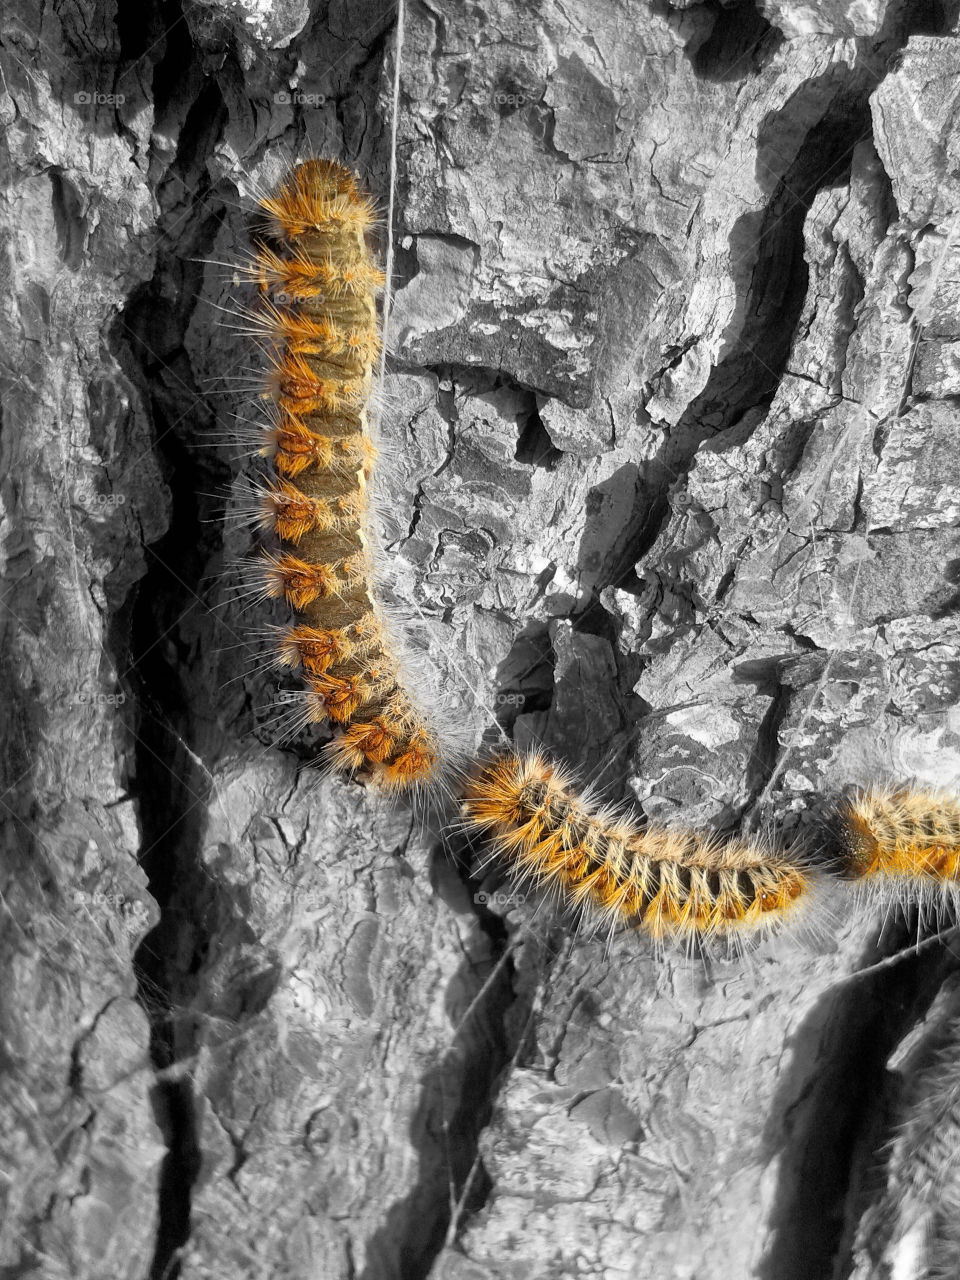 Caterpillar on rock